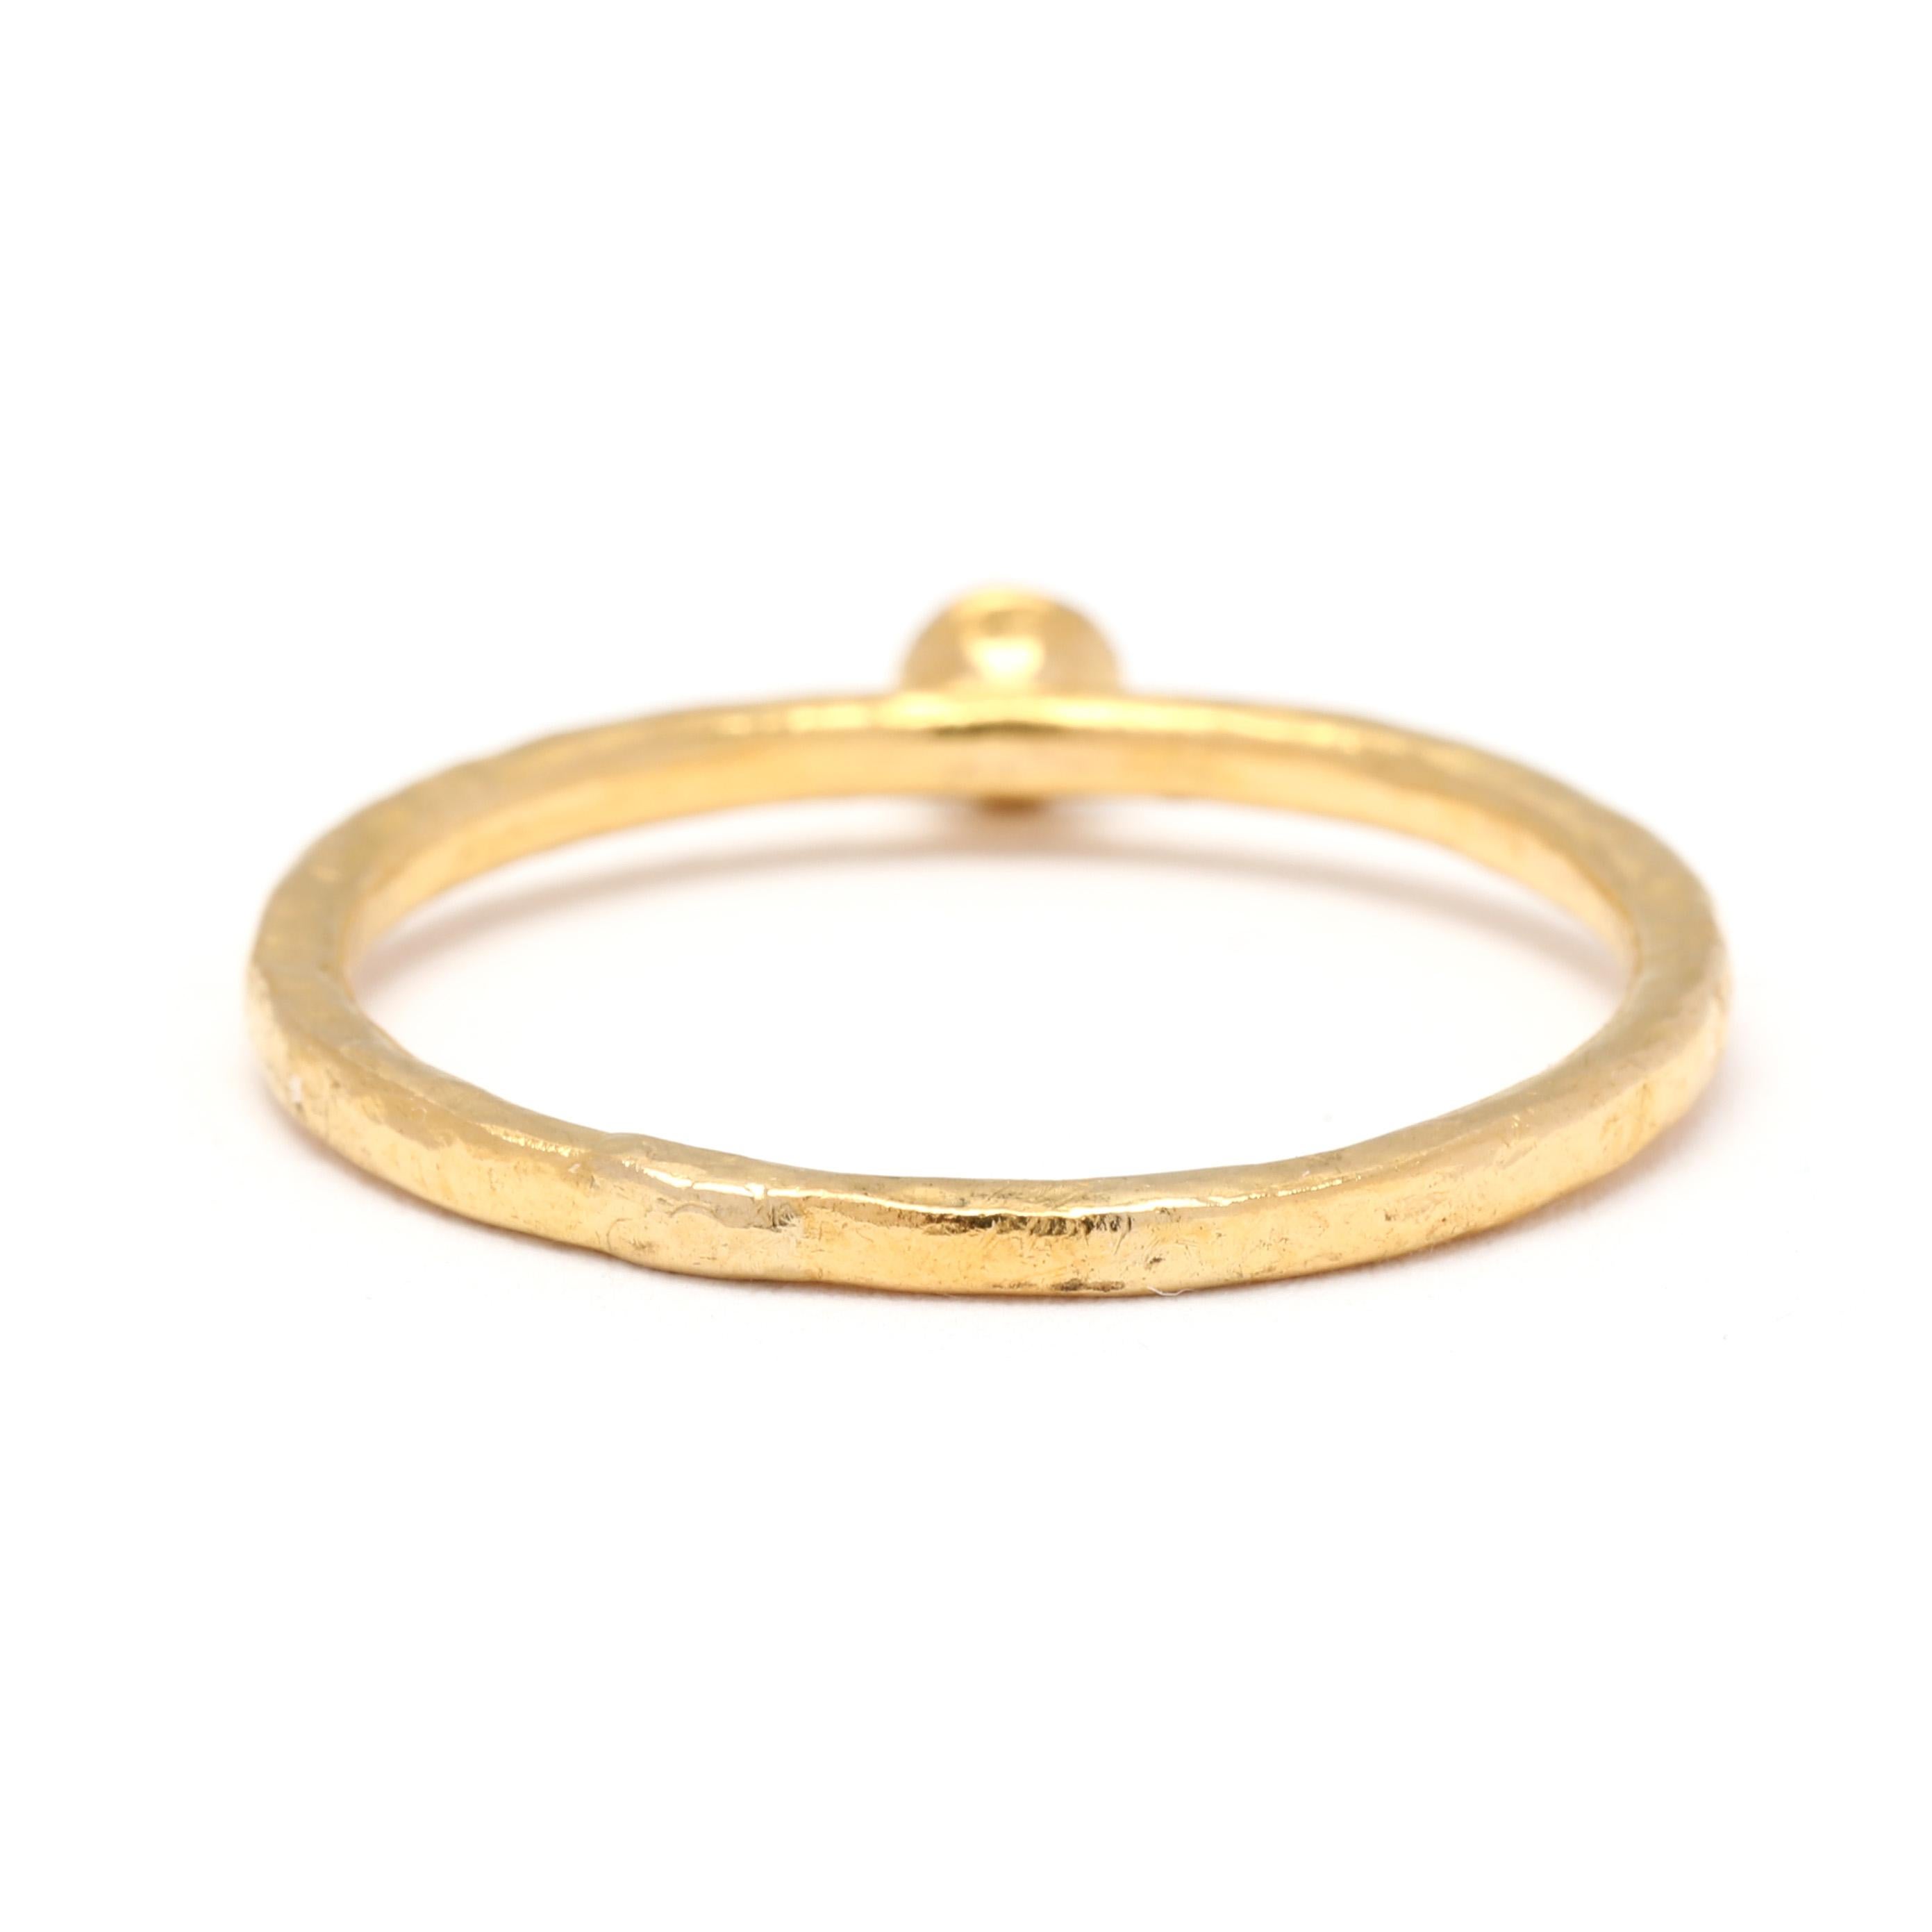 Round Cut Dainty Peridot Ring, 24k Yellow Gold, Ring Size 8.5, Thin Band, Textured Band